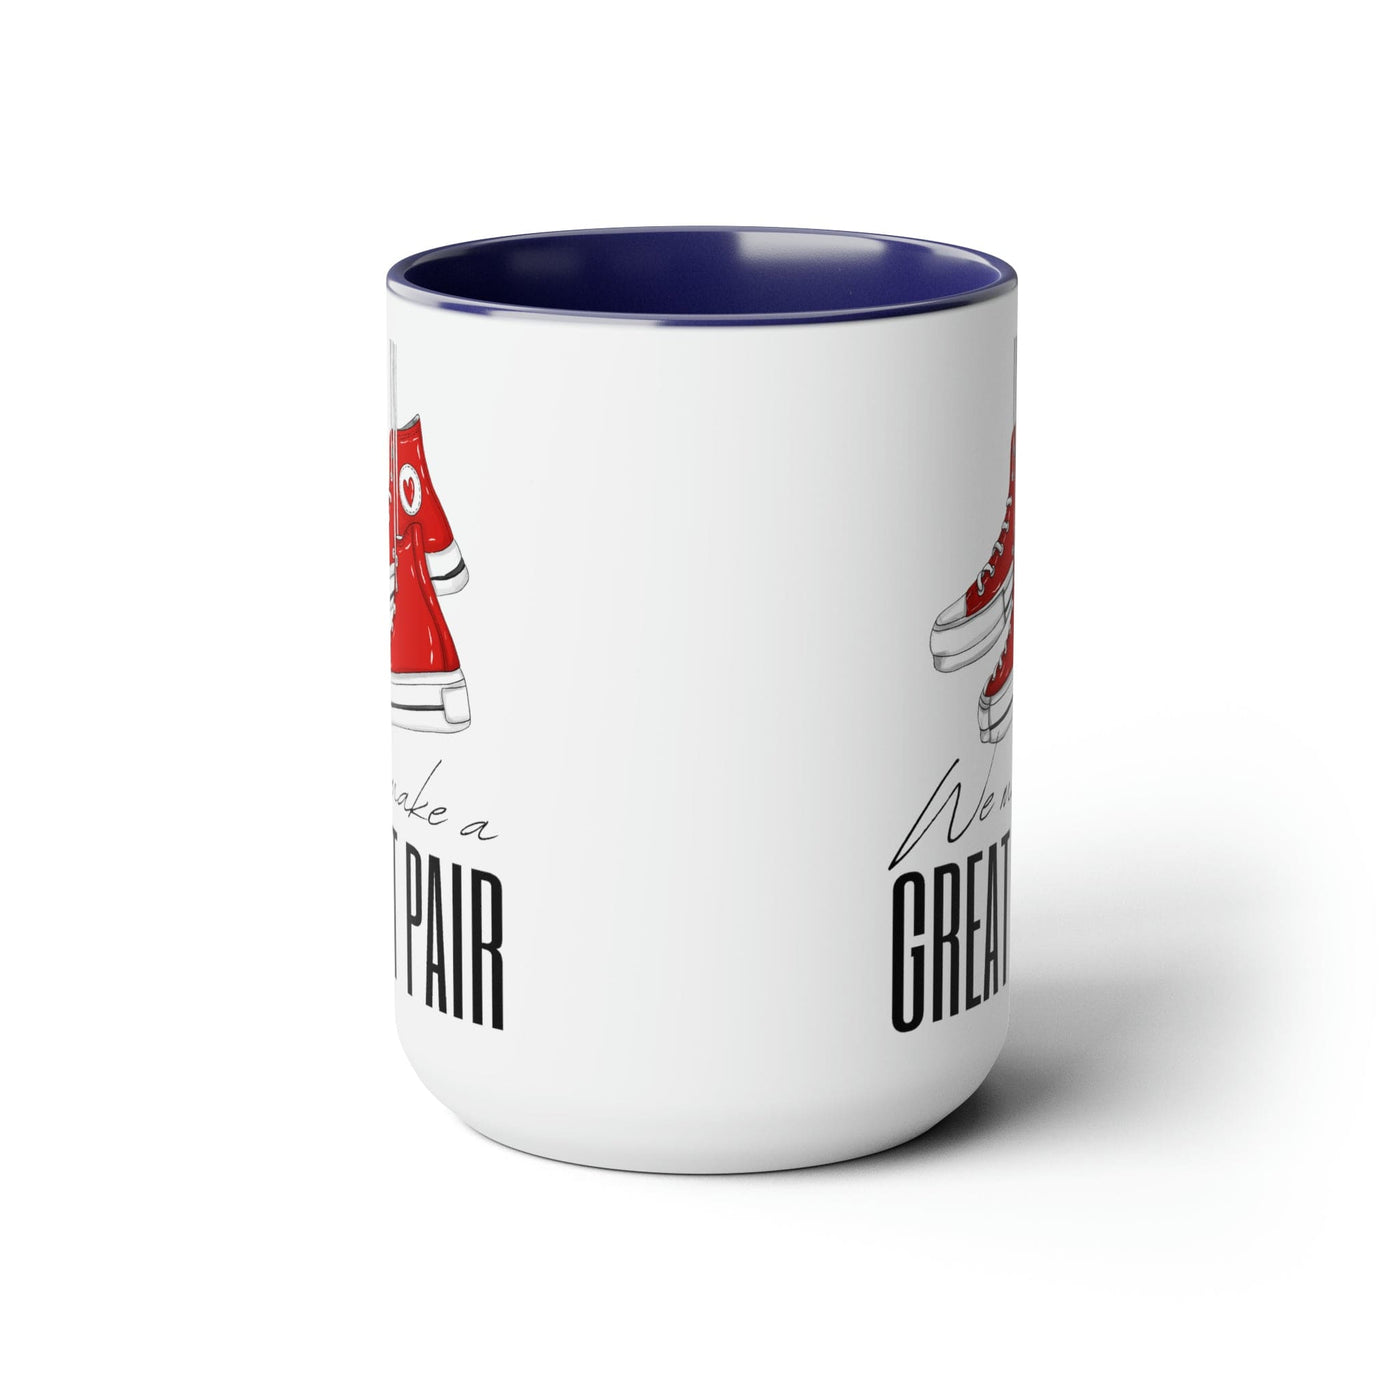 Accent Ceramic Coffee Mug 15oz - Say It Soul We Make a Great Pair Black - Mug